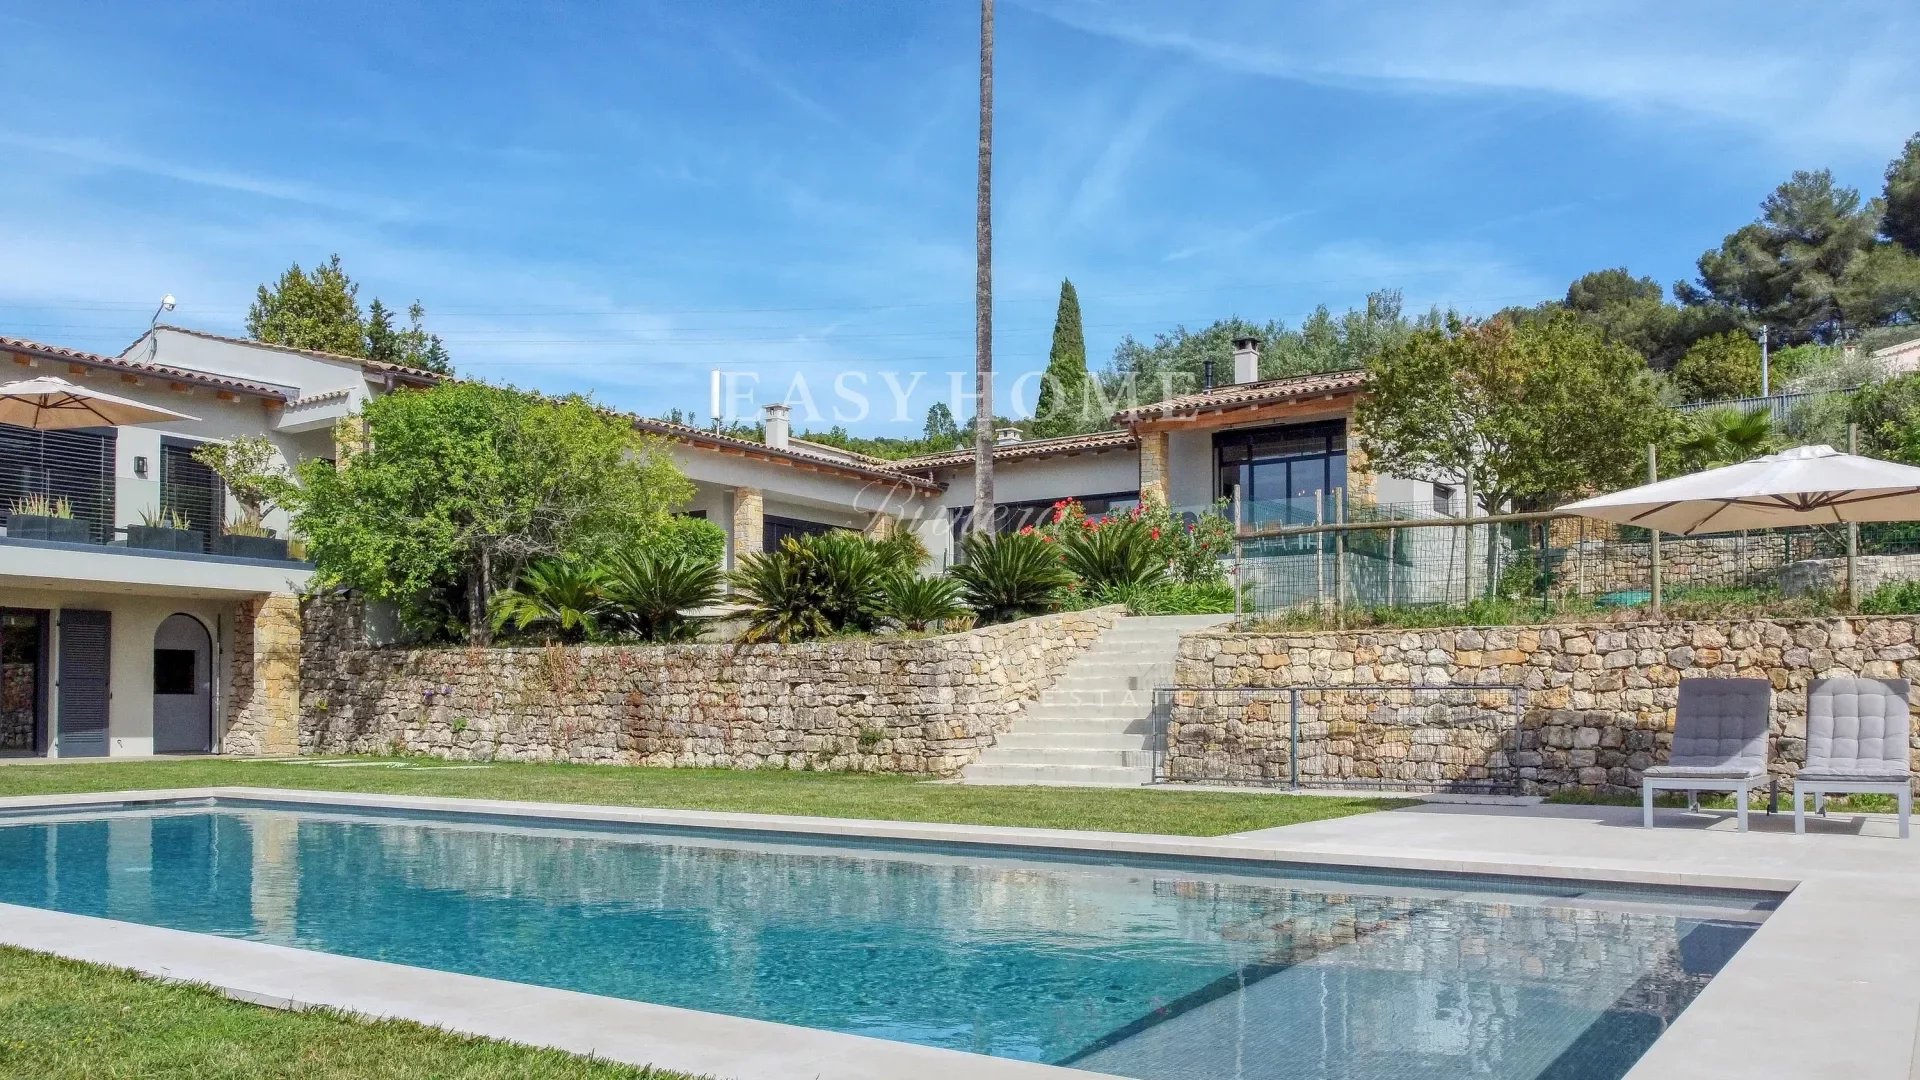 Purchase / Sale villa Mougins with a village view